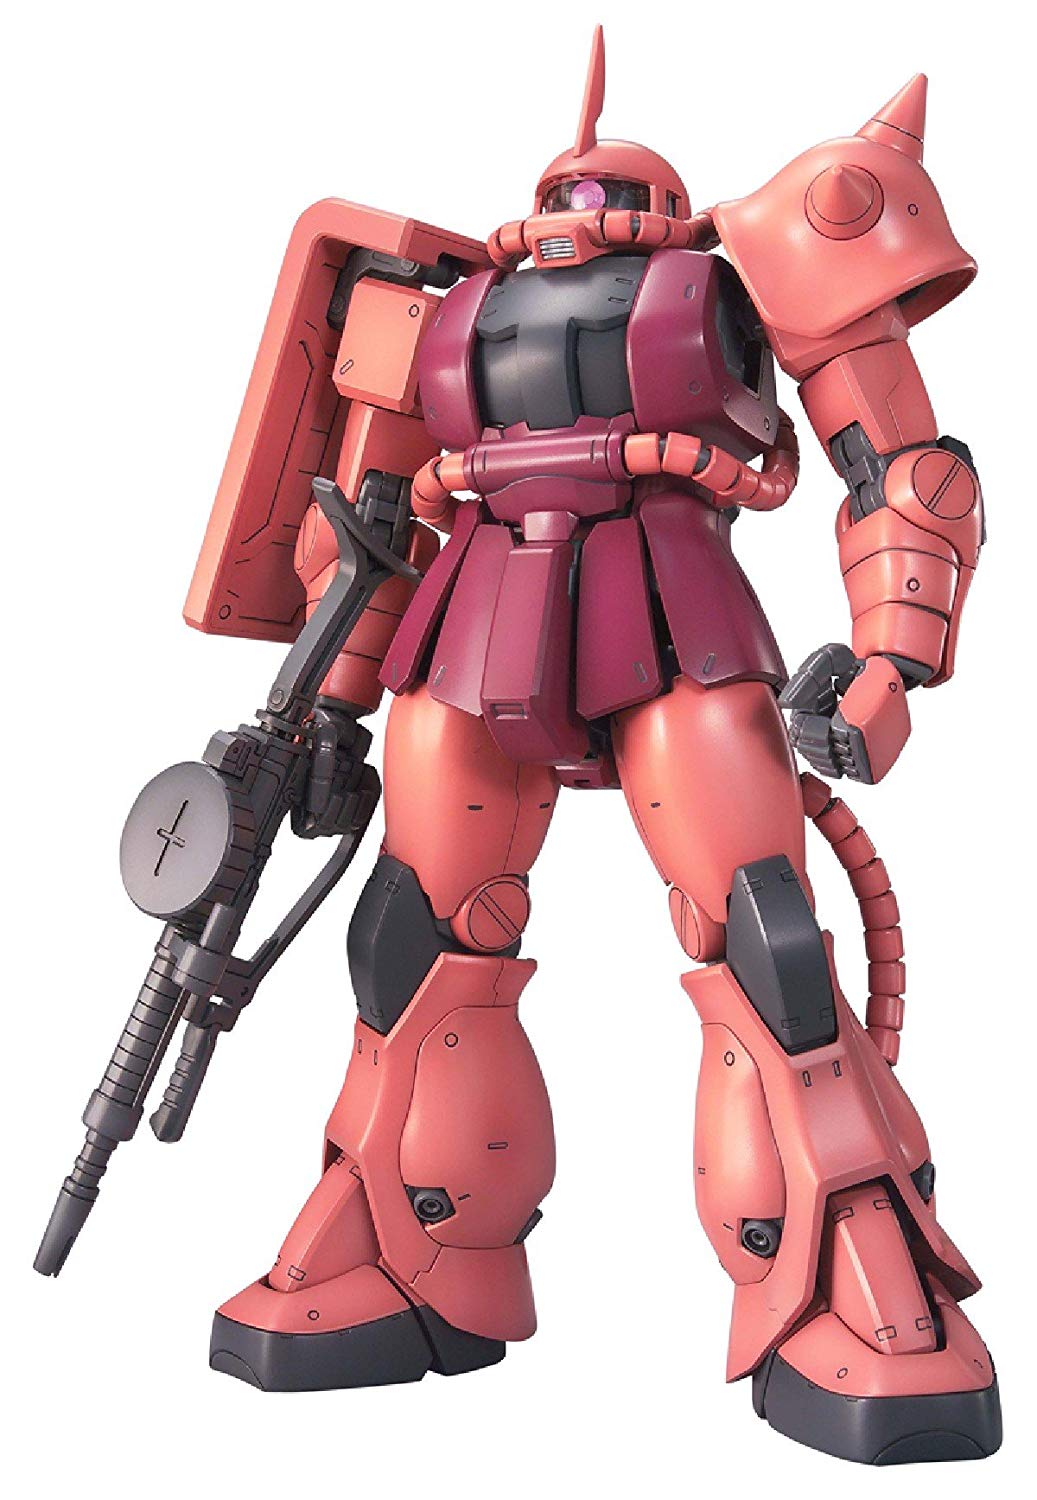 Gundam 1/100 MG MS-06S Char's Zaku II Zeon Ver. 2.0 Model Kit